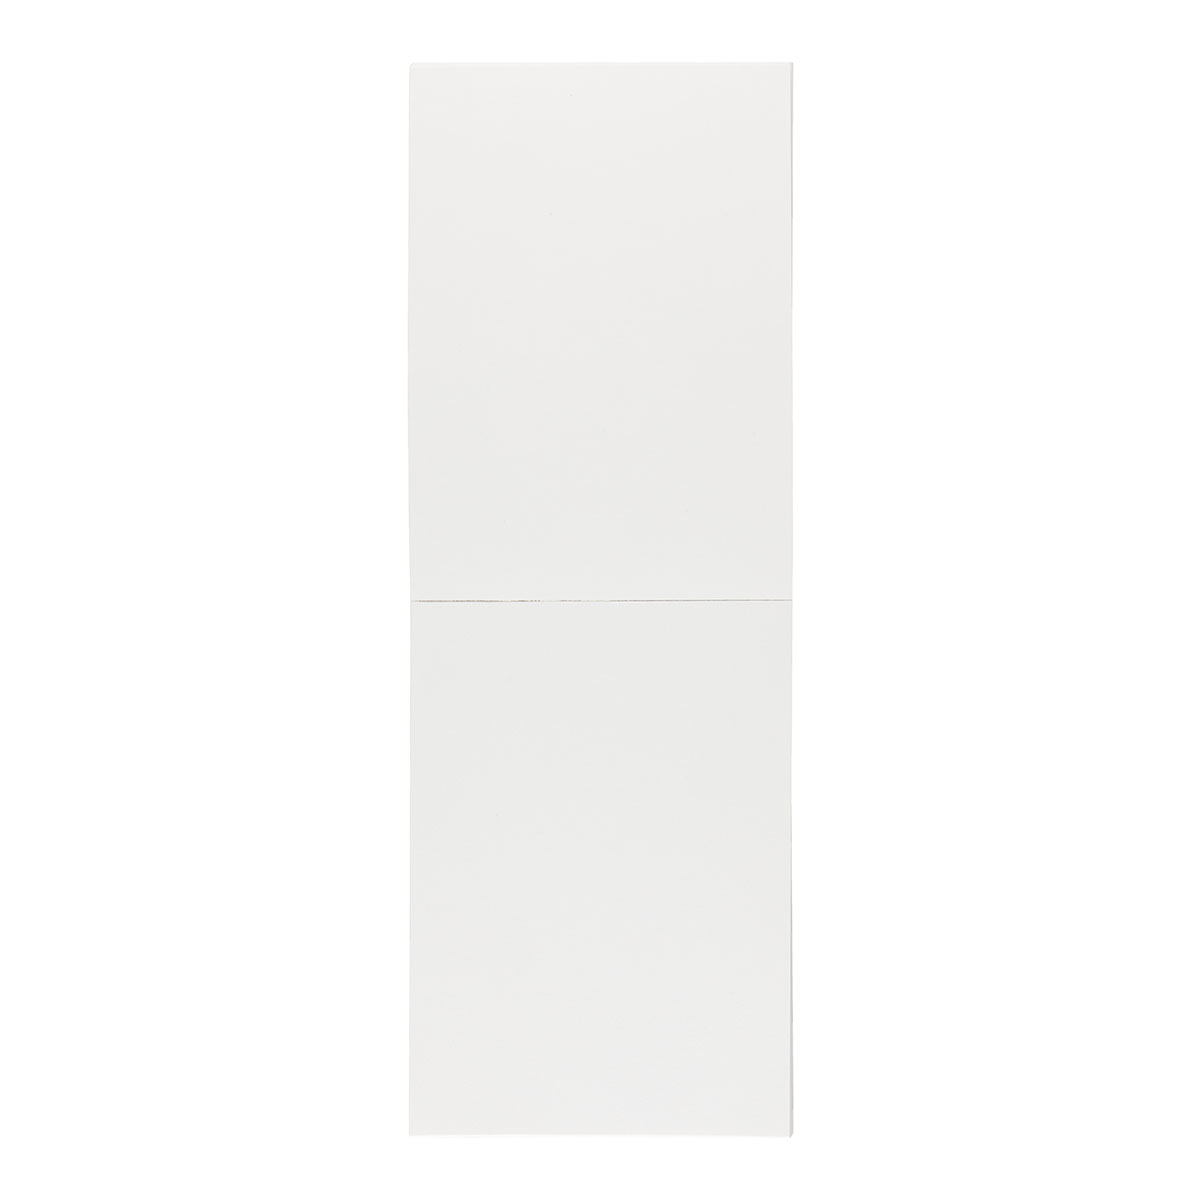 White A5 250 g 40 Sheets Clairefontaine PaintON Multi-Technique Pad 